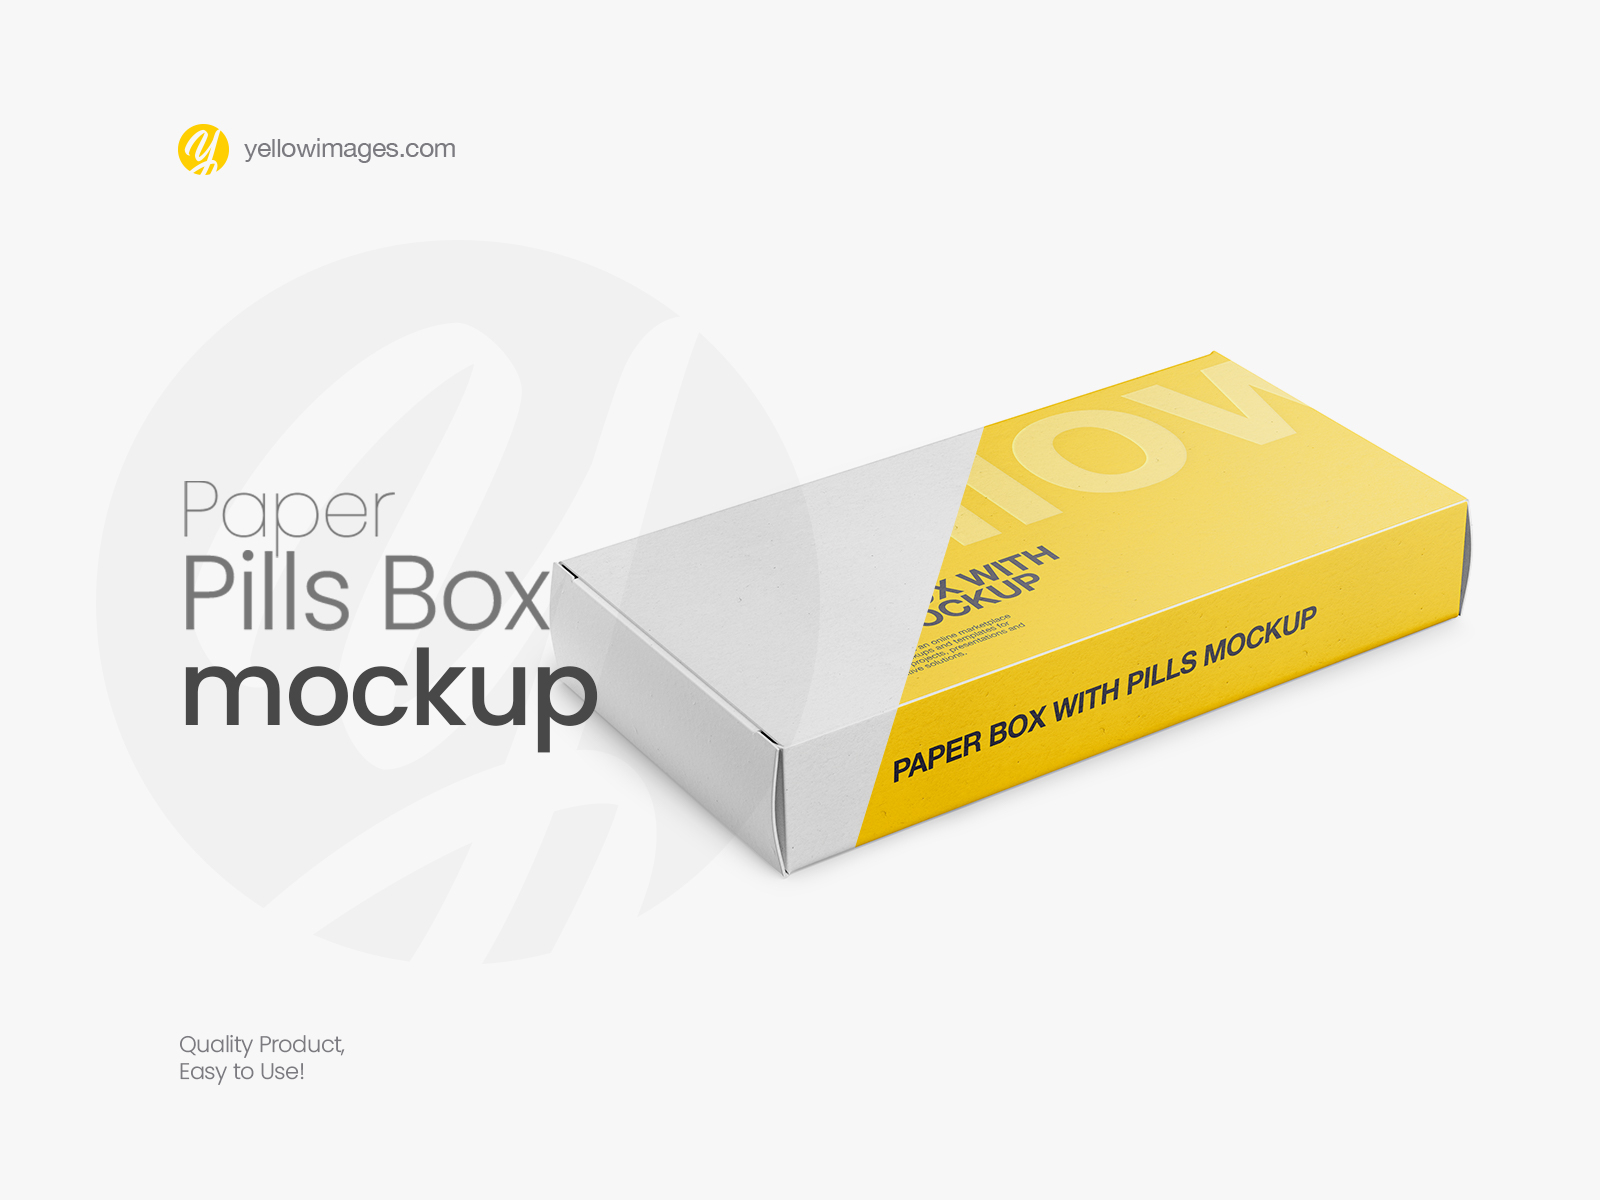 Paper Pills Box Mockup - Halfside View by Dmytro Ovcharenko on Dribbble